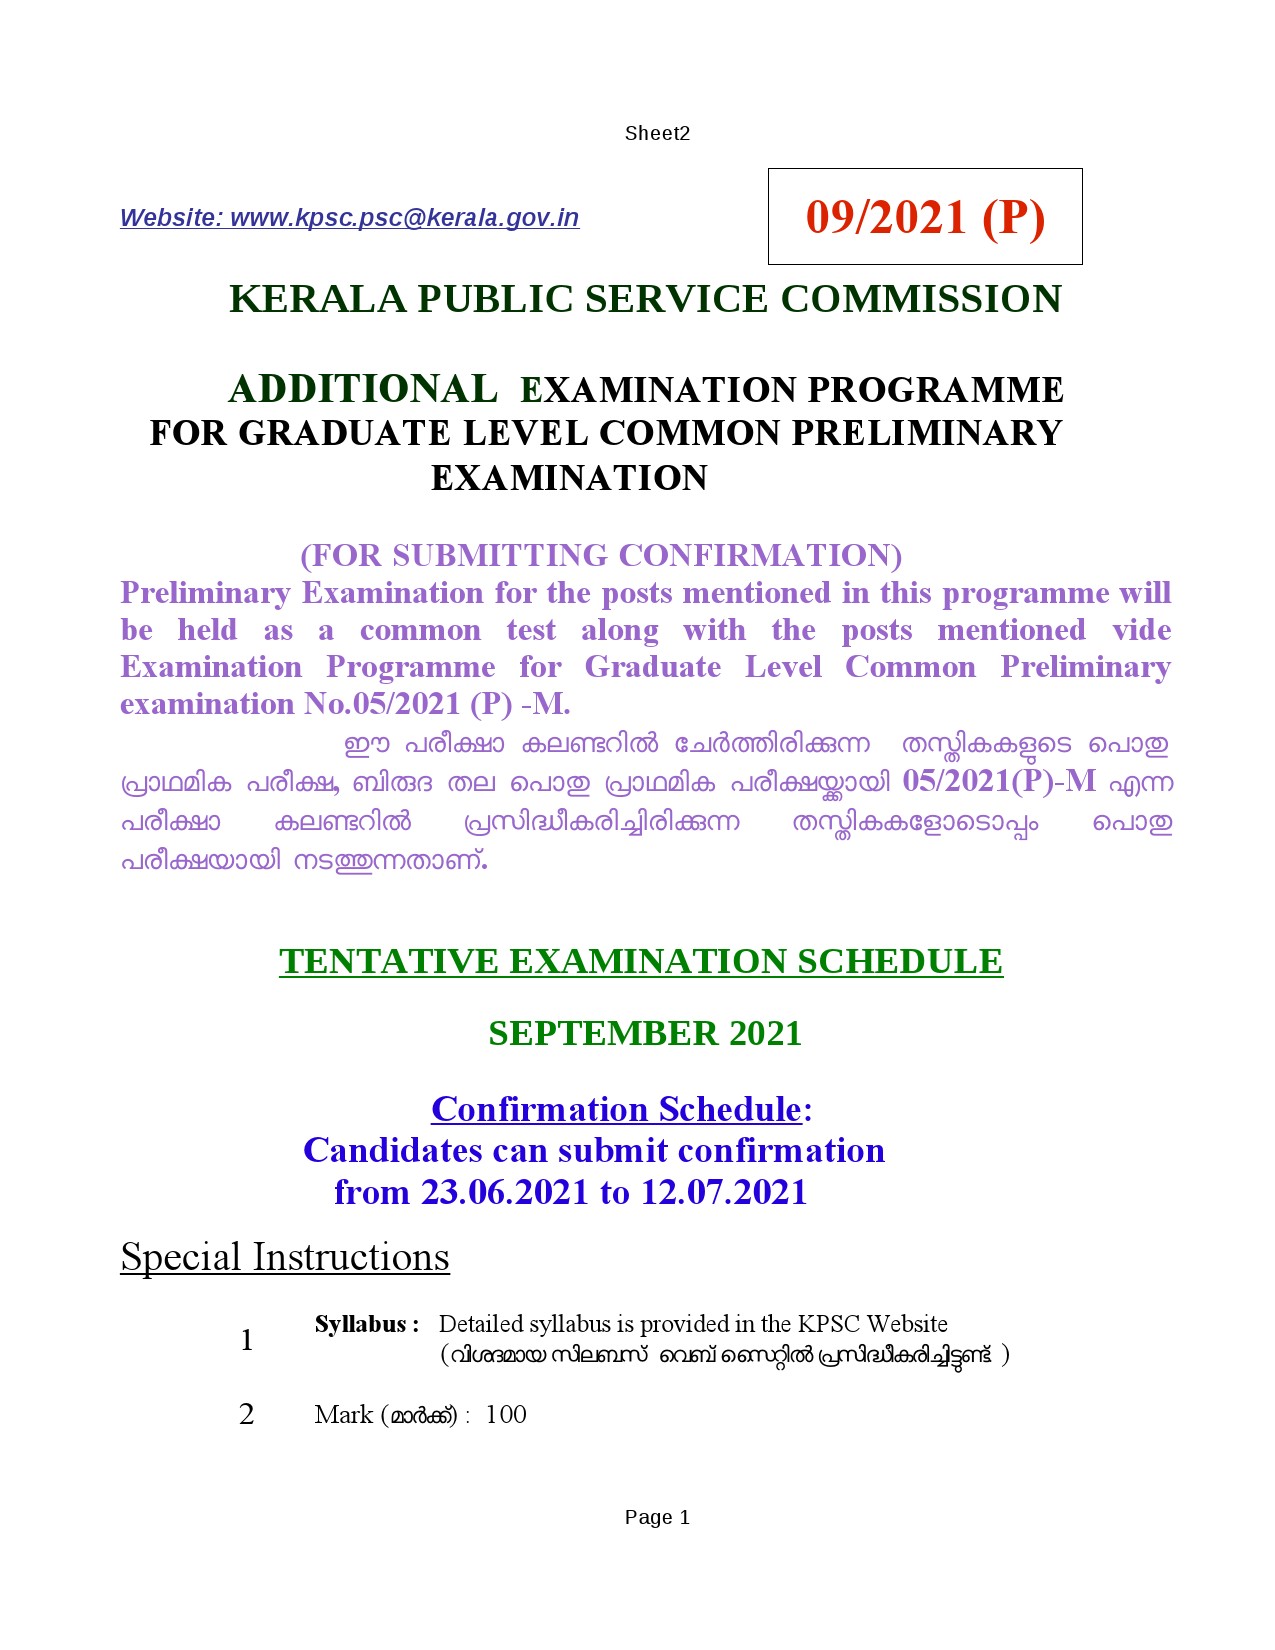 Additional Exam Graduate Level Common Prelims Exam Sept 2021 - Notification Image 1